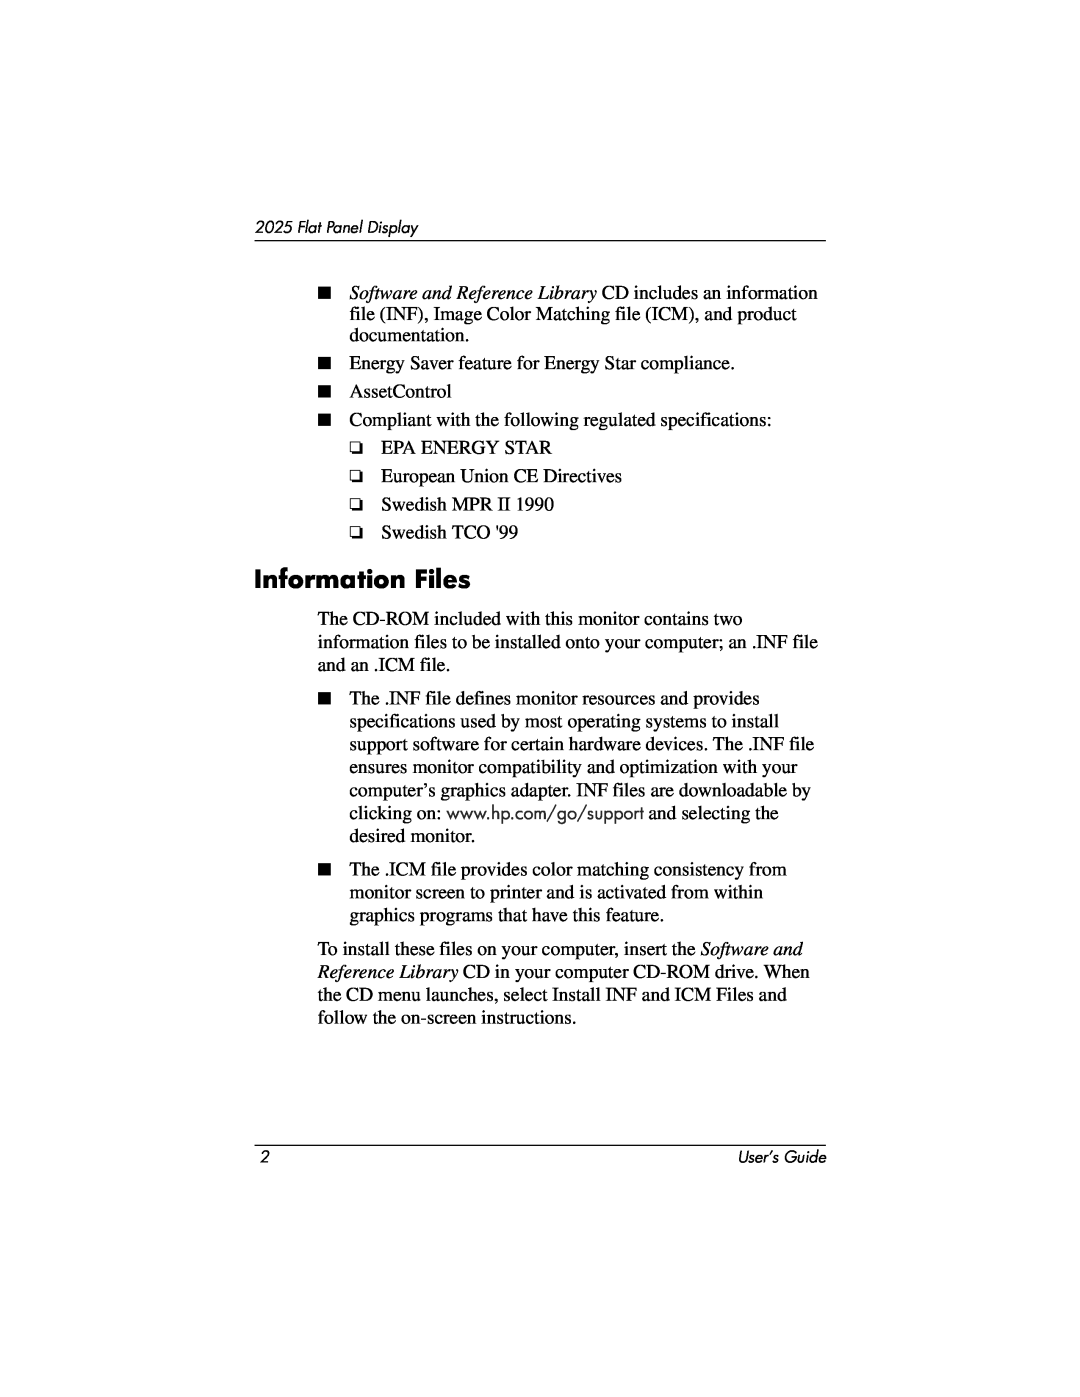 Compaq 2025 manual Information Files 